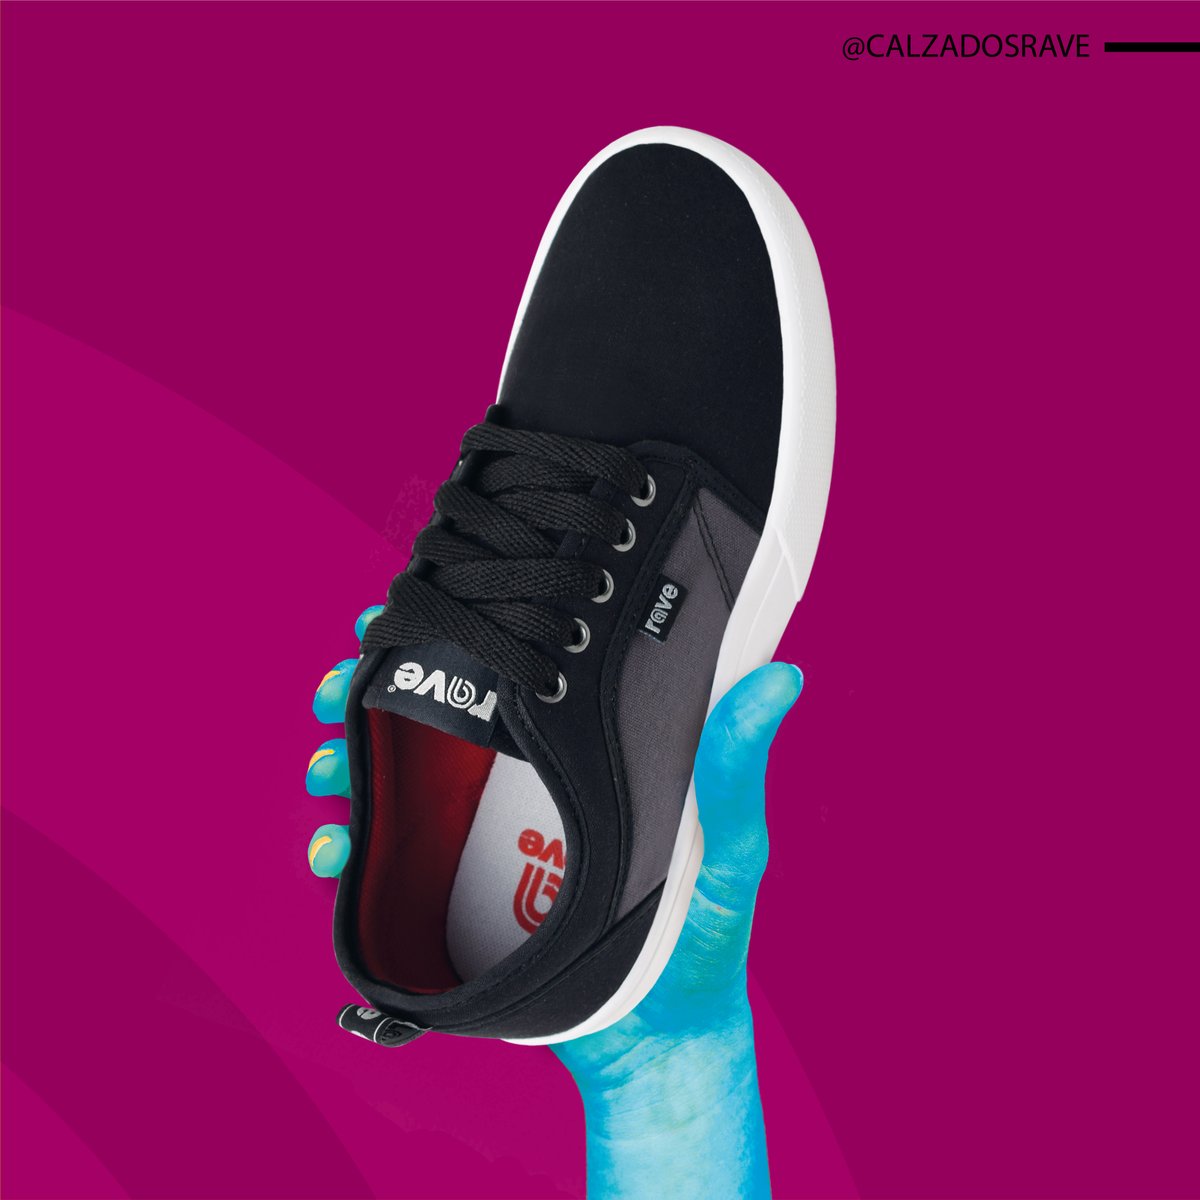 Rave on Twitter: "Cual es tu #Mood de hoy?! El nuestro es #Rave https://t.co/zqQZRzCcFc . . #zapatos #sneaker #teen #kids #love #trend #instagood #fashion #zapatillas https://t.co/IYpuAkDvRr" / Twitter